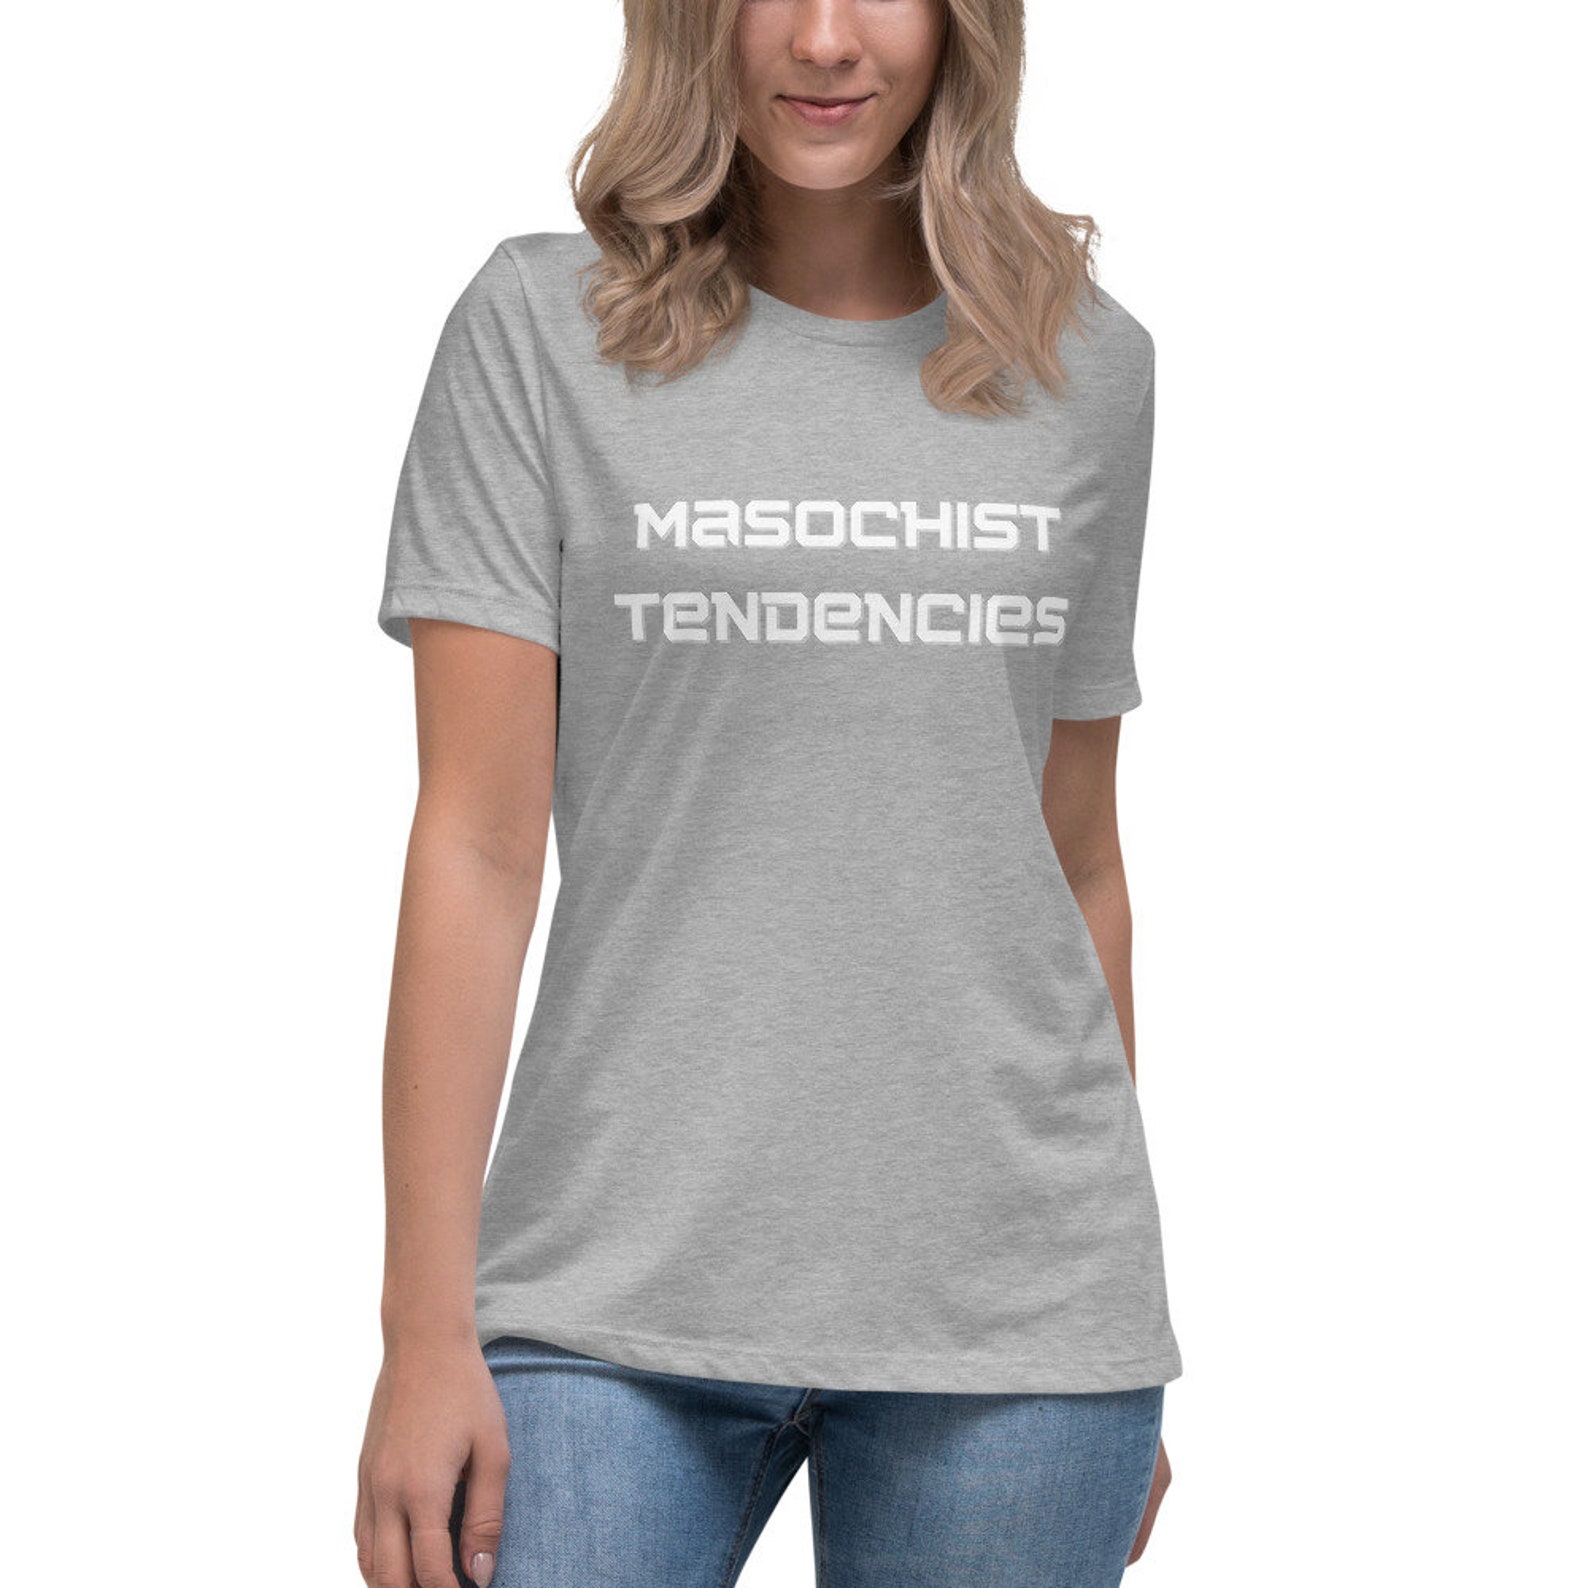 Masochist tendencies shirt Masochist gift for her Funny BDSM | Etsy